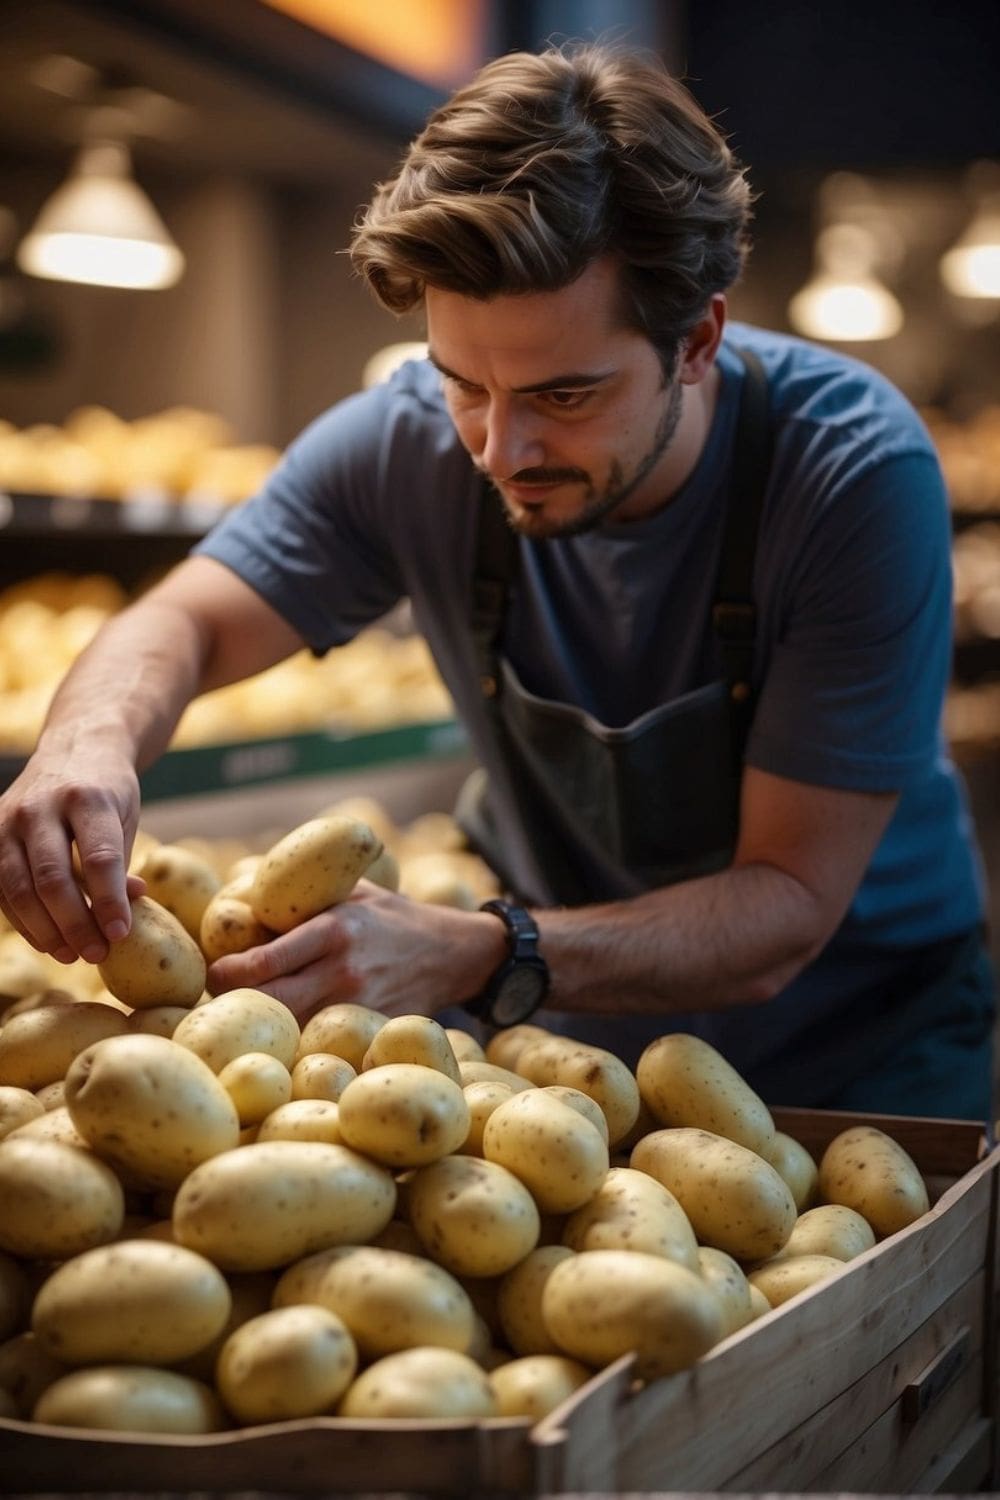 A photo of a man selecting potatoes.